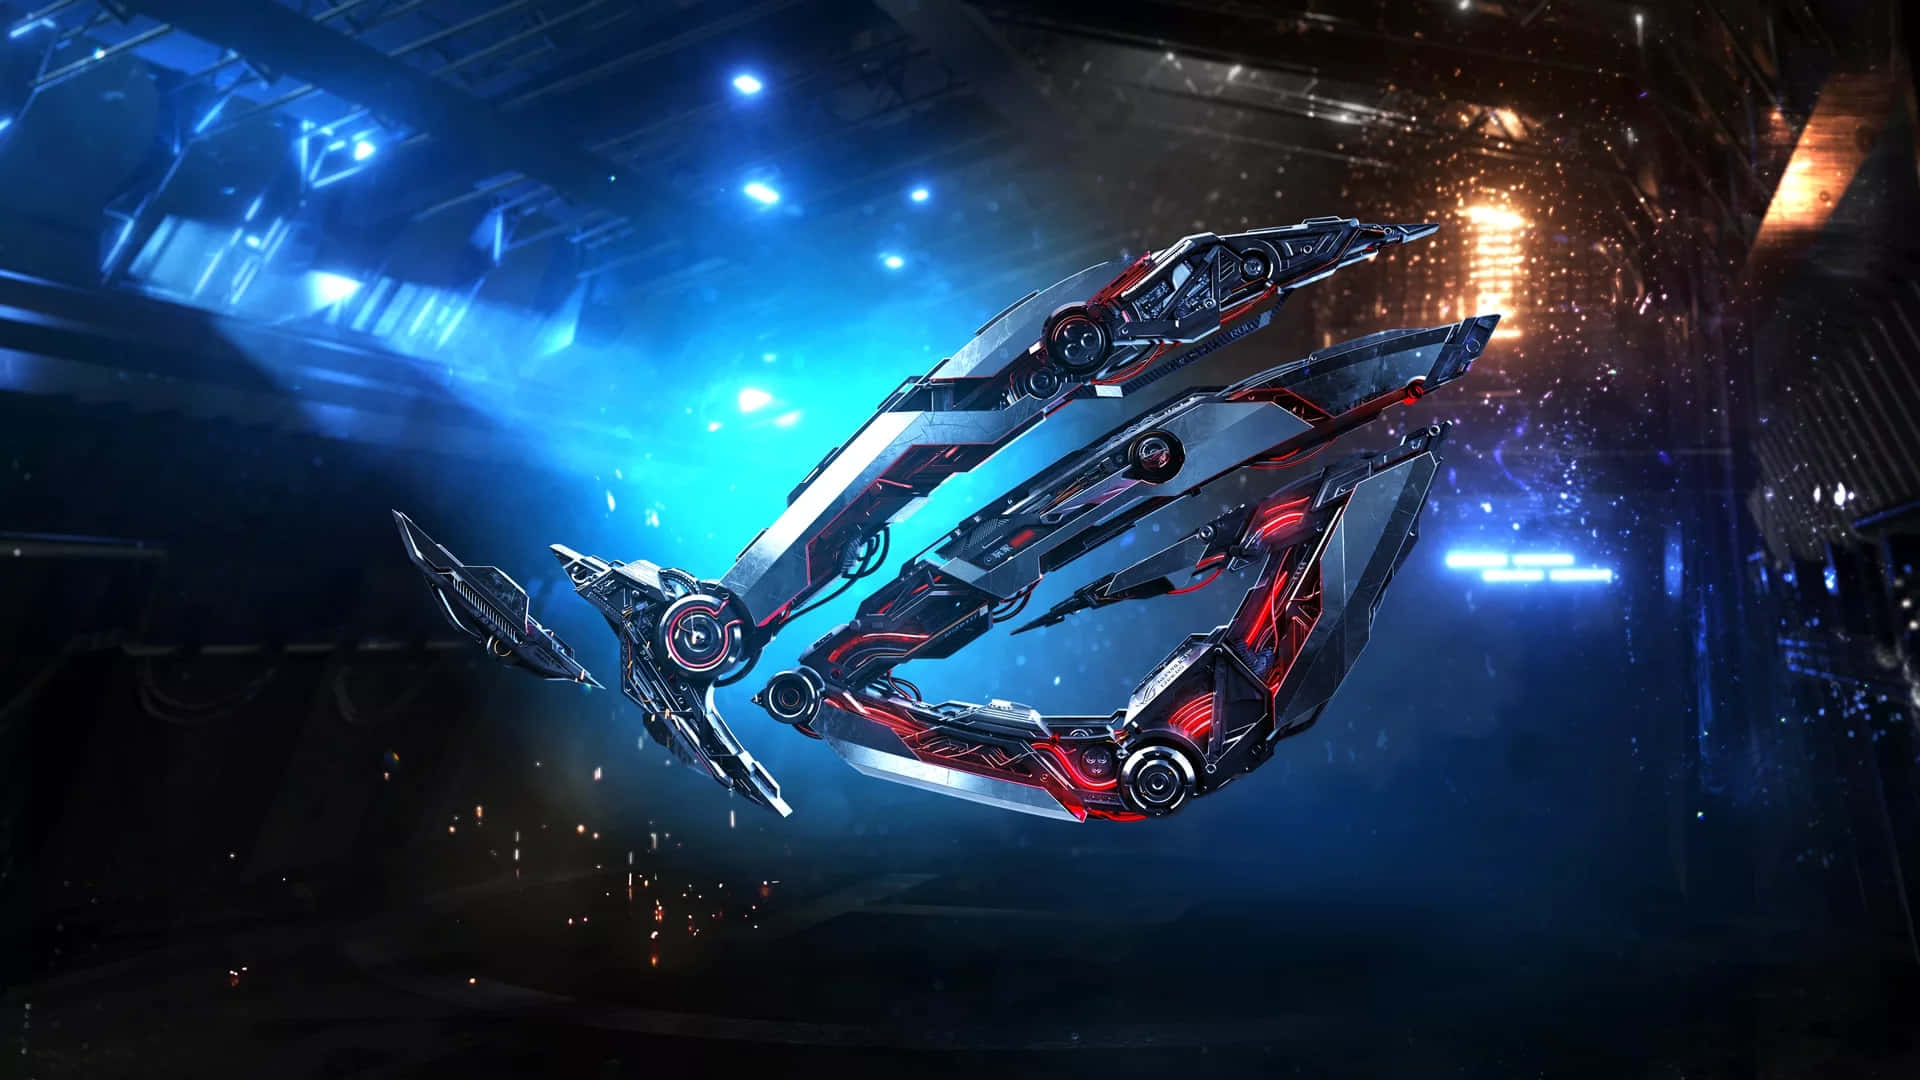 Asus T U F Gaming Spaceship Concept Art Background